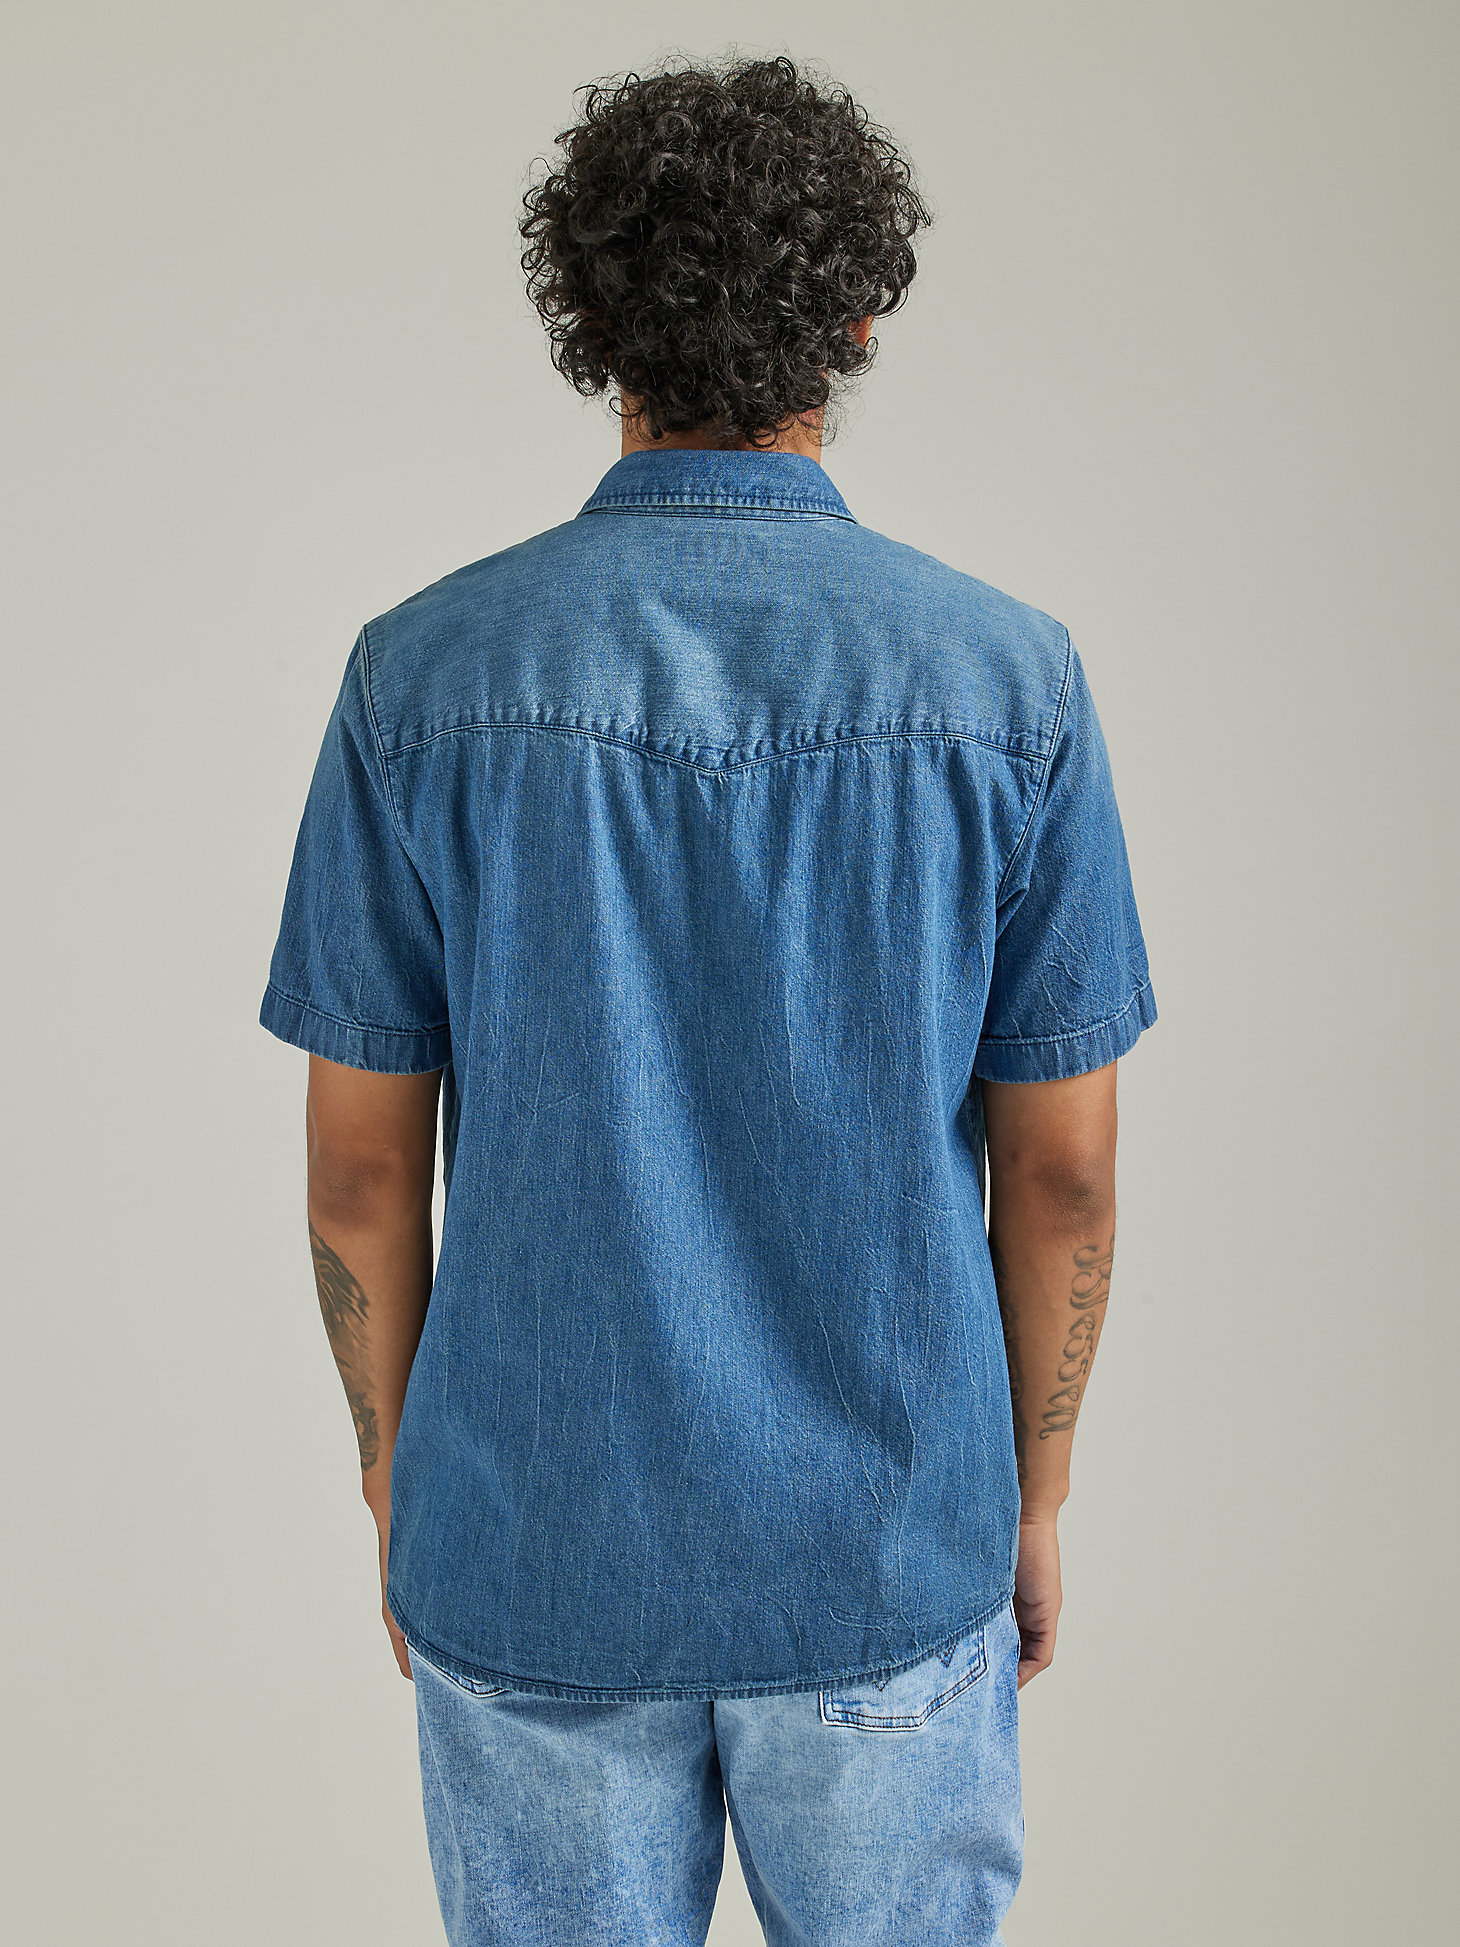 Men's Short Sleeve Western Denim Shirt in Medium Wash alternative view 1